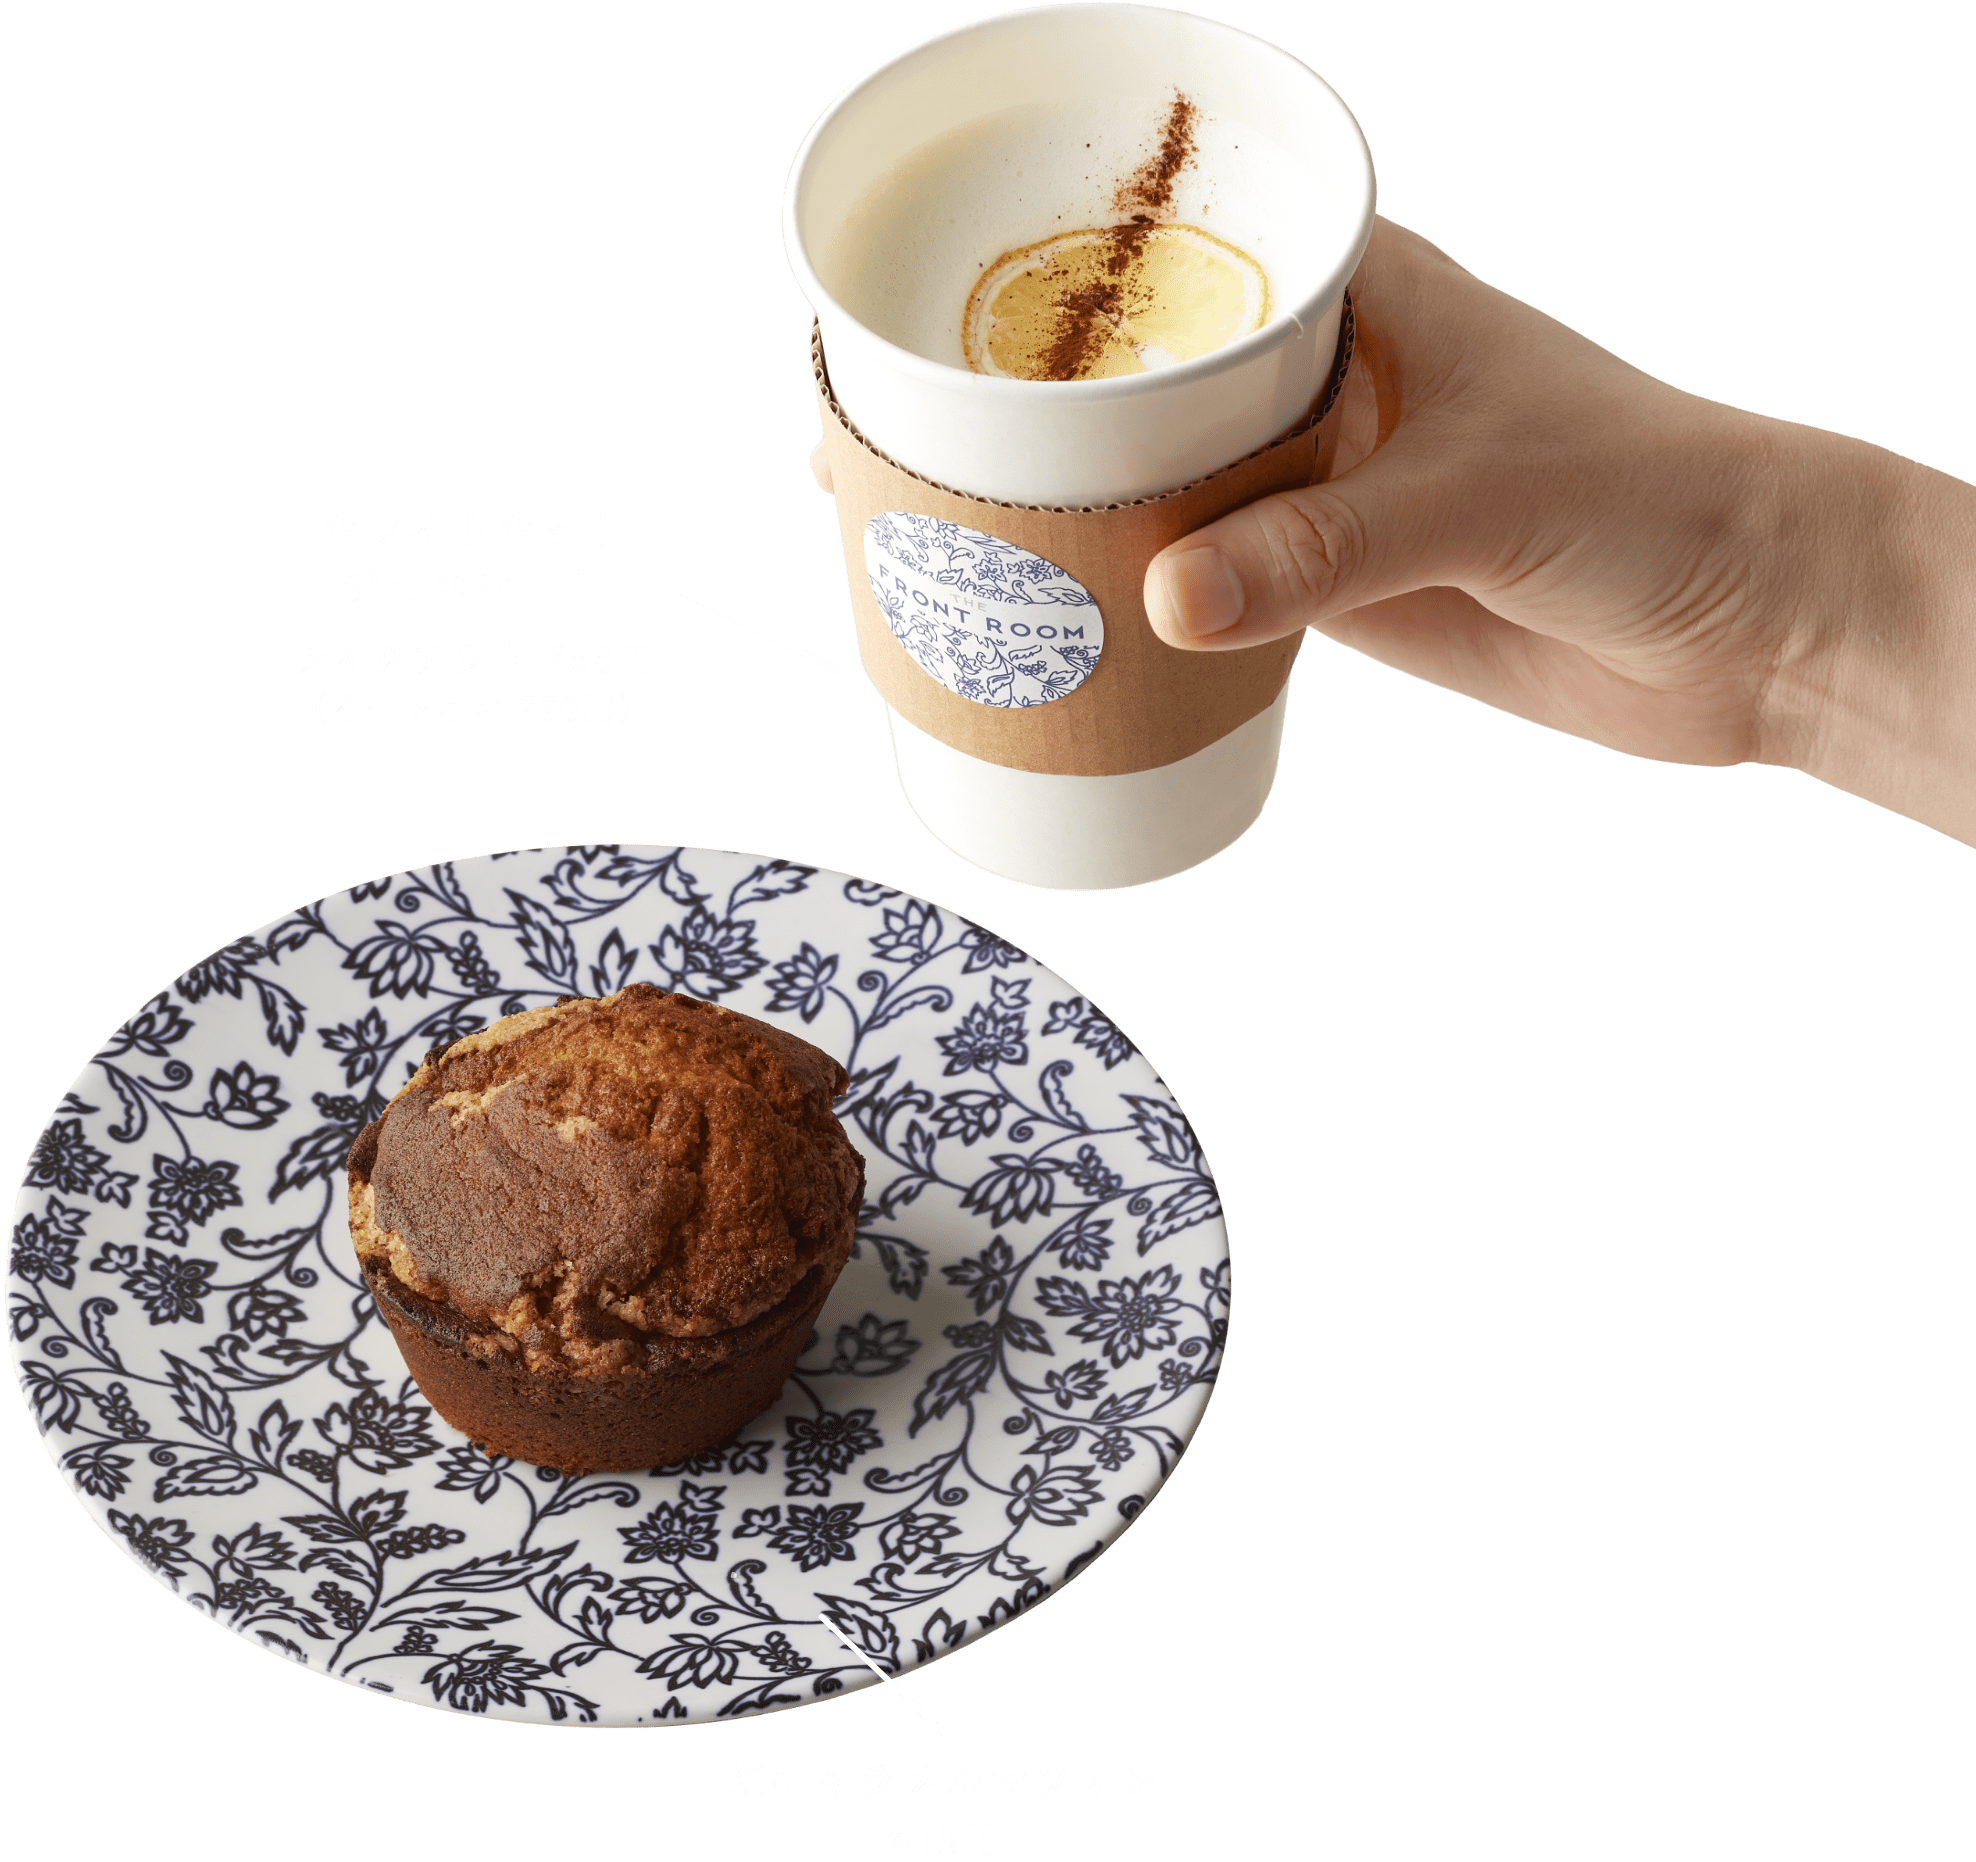 Takeout 756 yen (eat here 770 yen), White Hot Chocolate Salted Caramel Muffin 418 yen